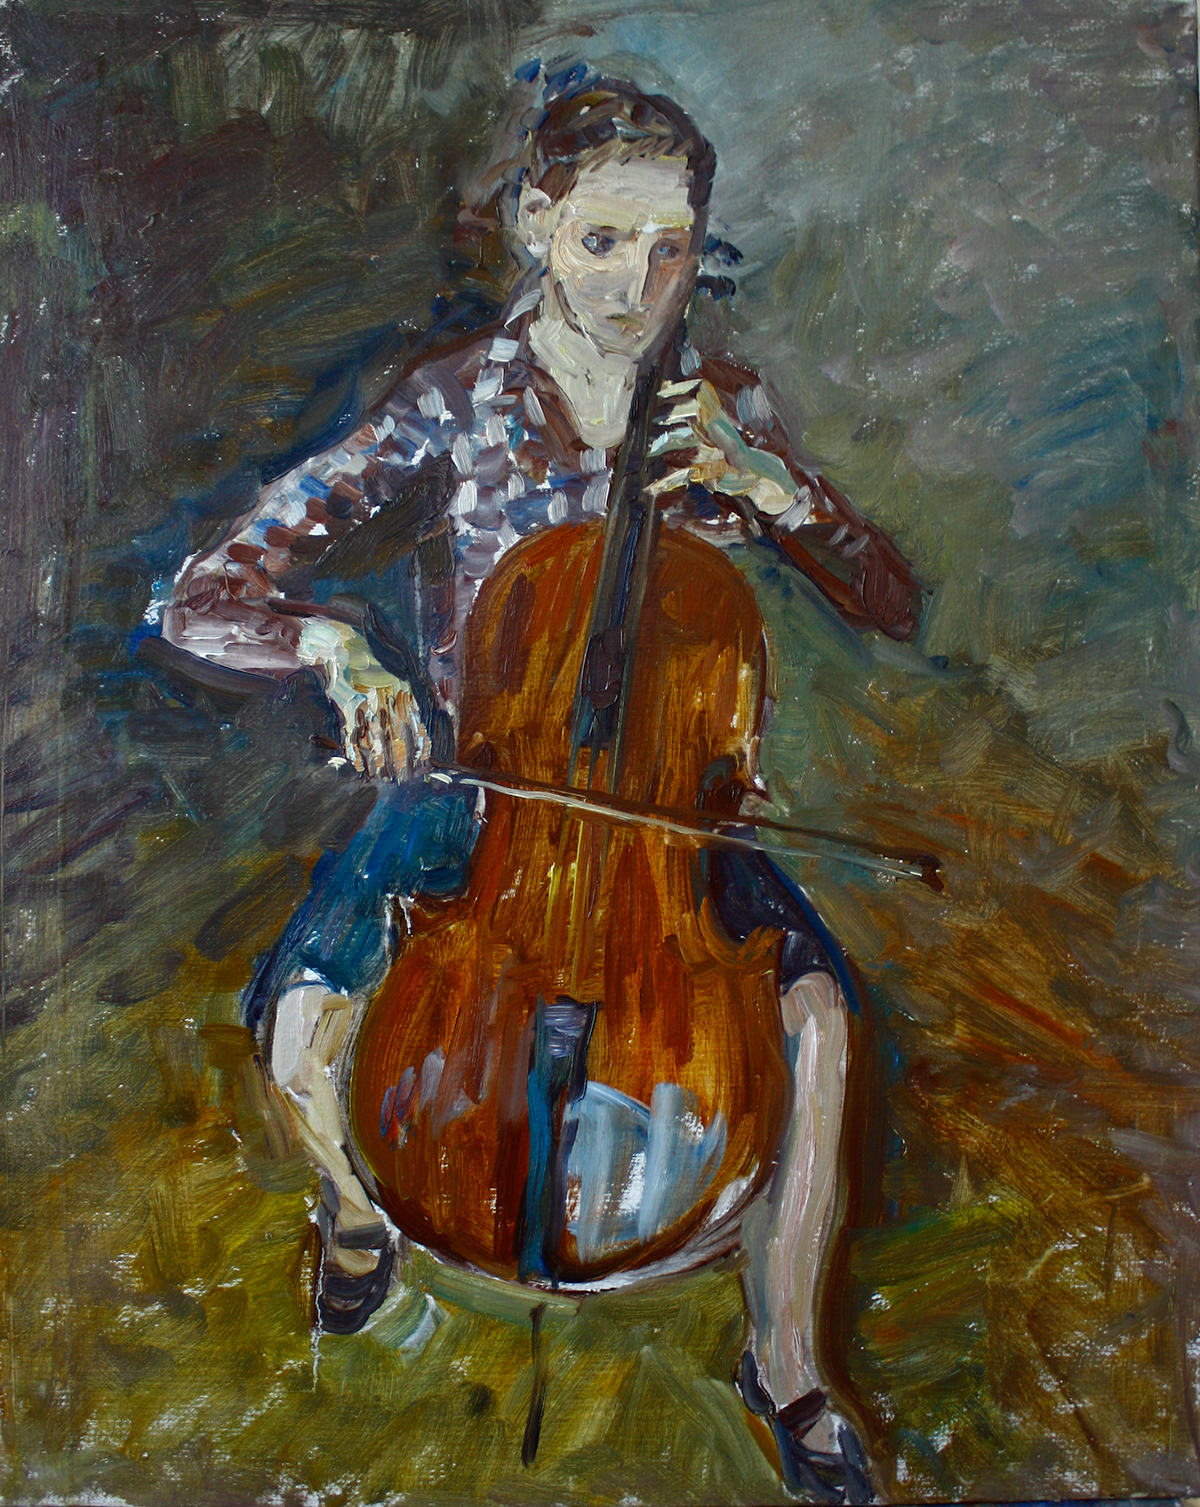 music cello paint oil canvas Etude girl